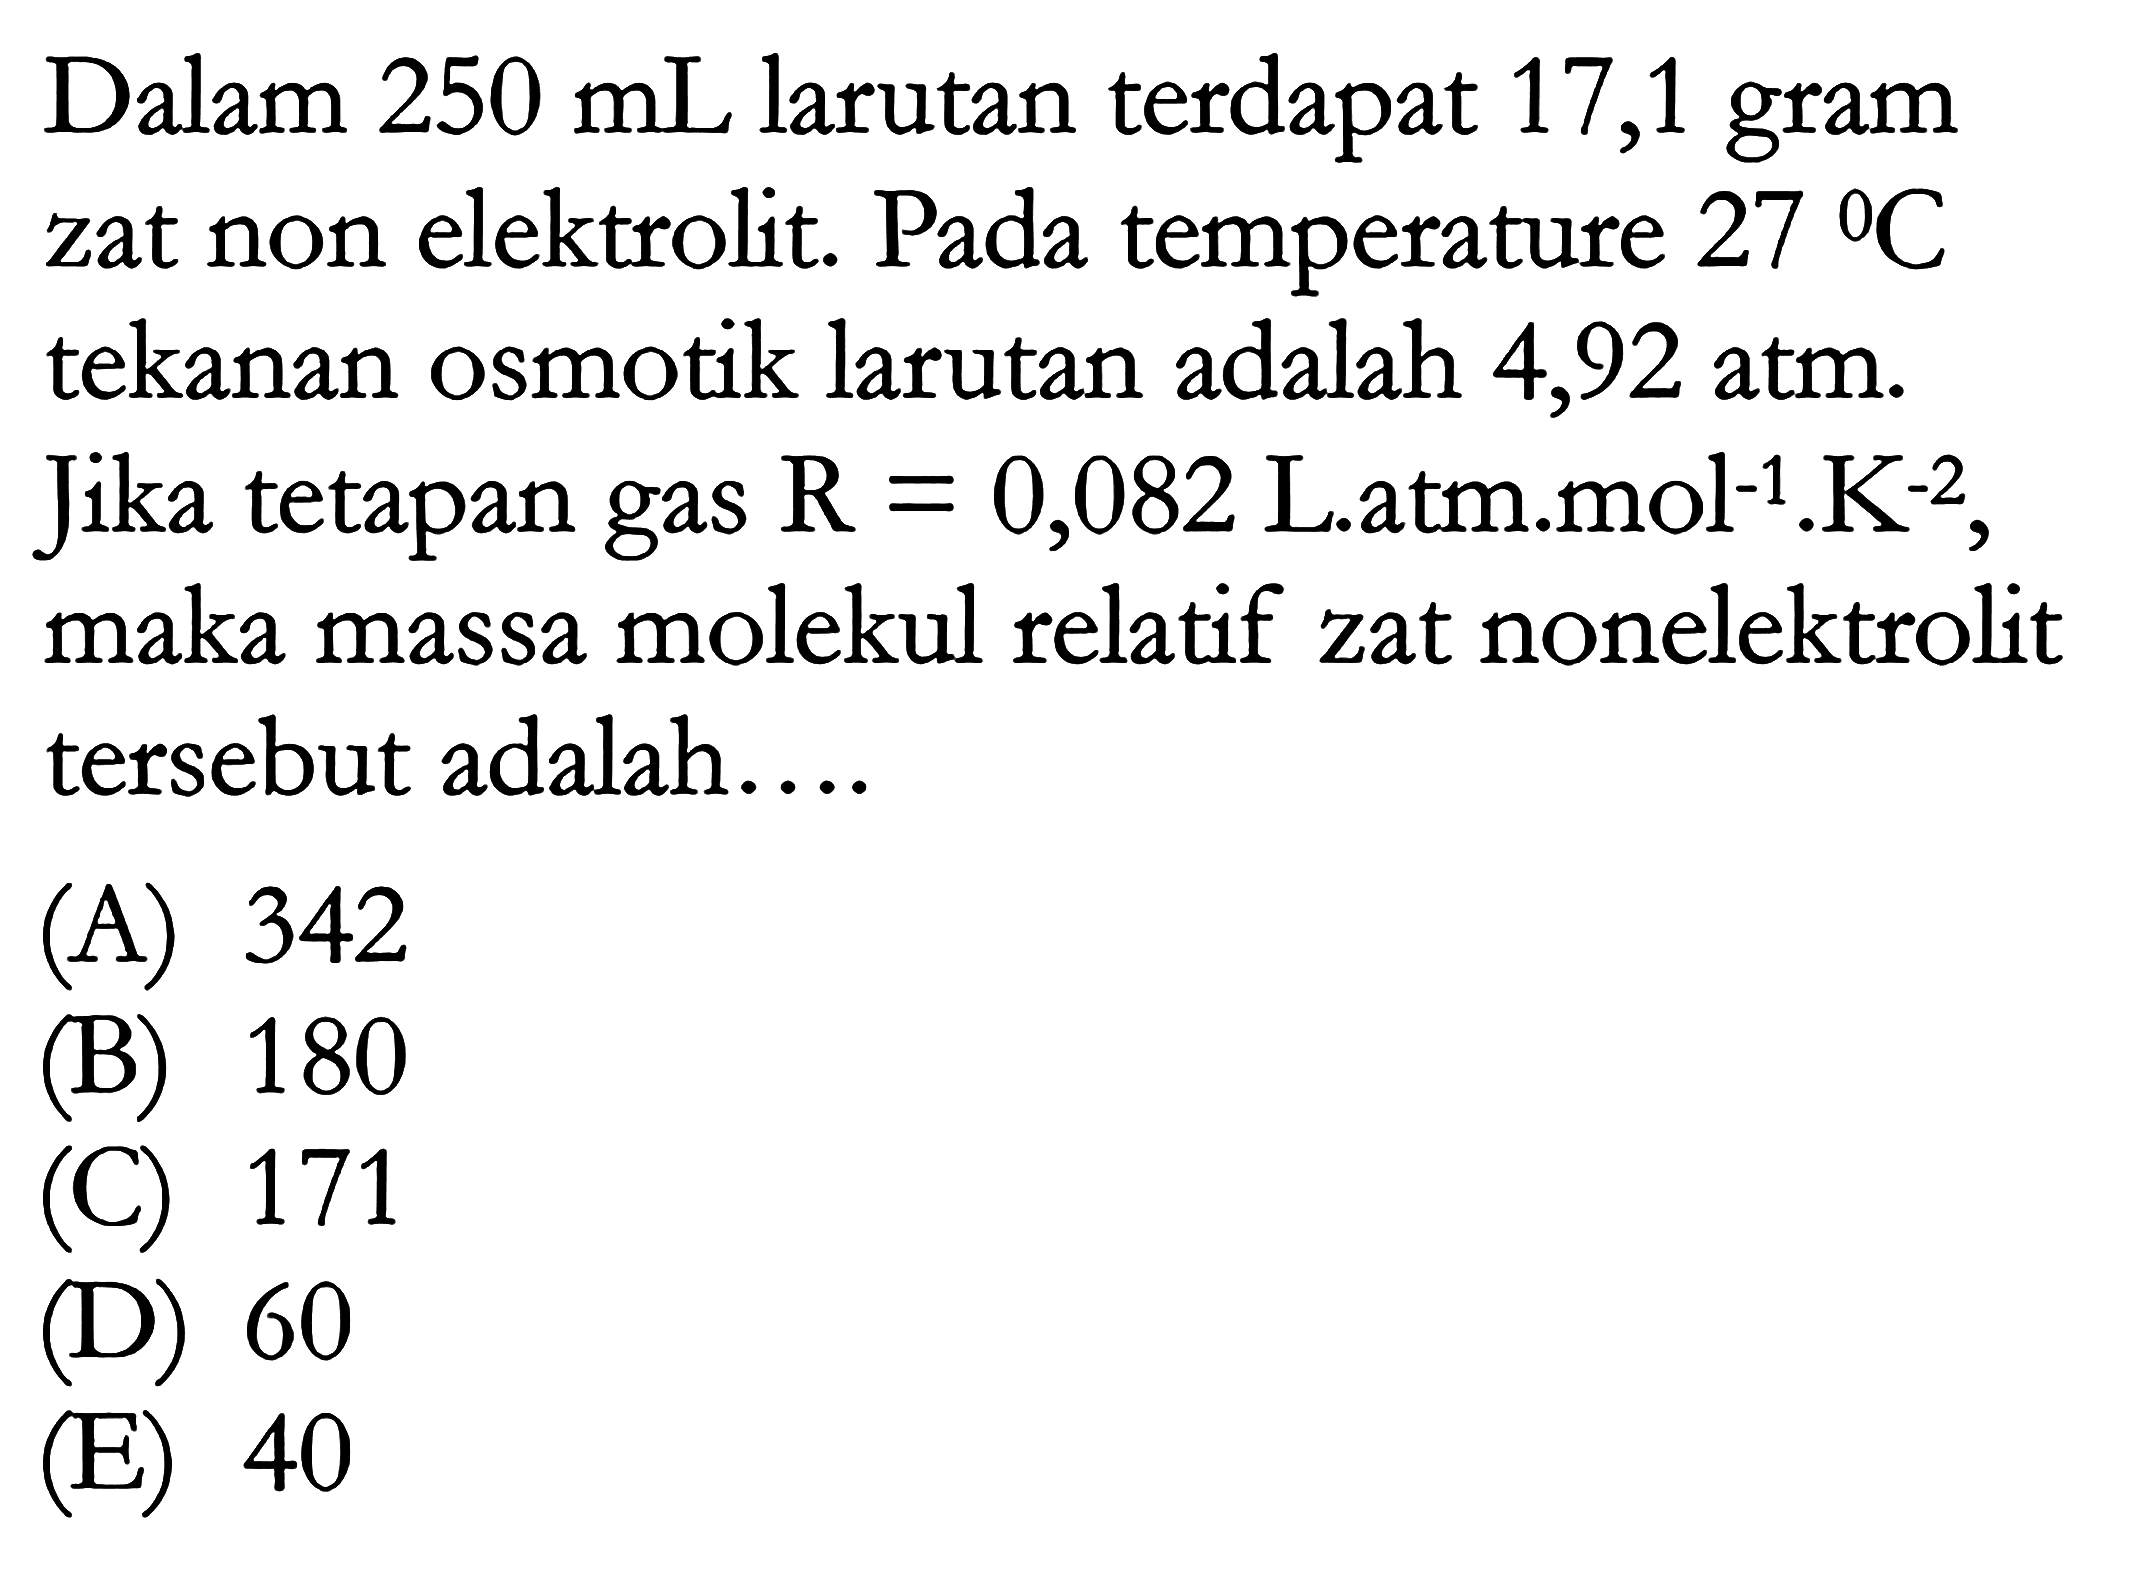 Dalam 250 mL larutan terdapat 17,1 gram zat non elektrolit. Pada temperature 27 C tekanan osmotik larutan adalah 4,92 atm. Jika tetapan gas R = 0,082 L.atm.mol^(-1).K^(-2), maka massa molekul relatif zat nonelektrolit tersebut adalah ...